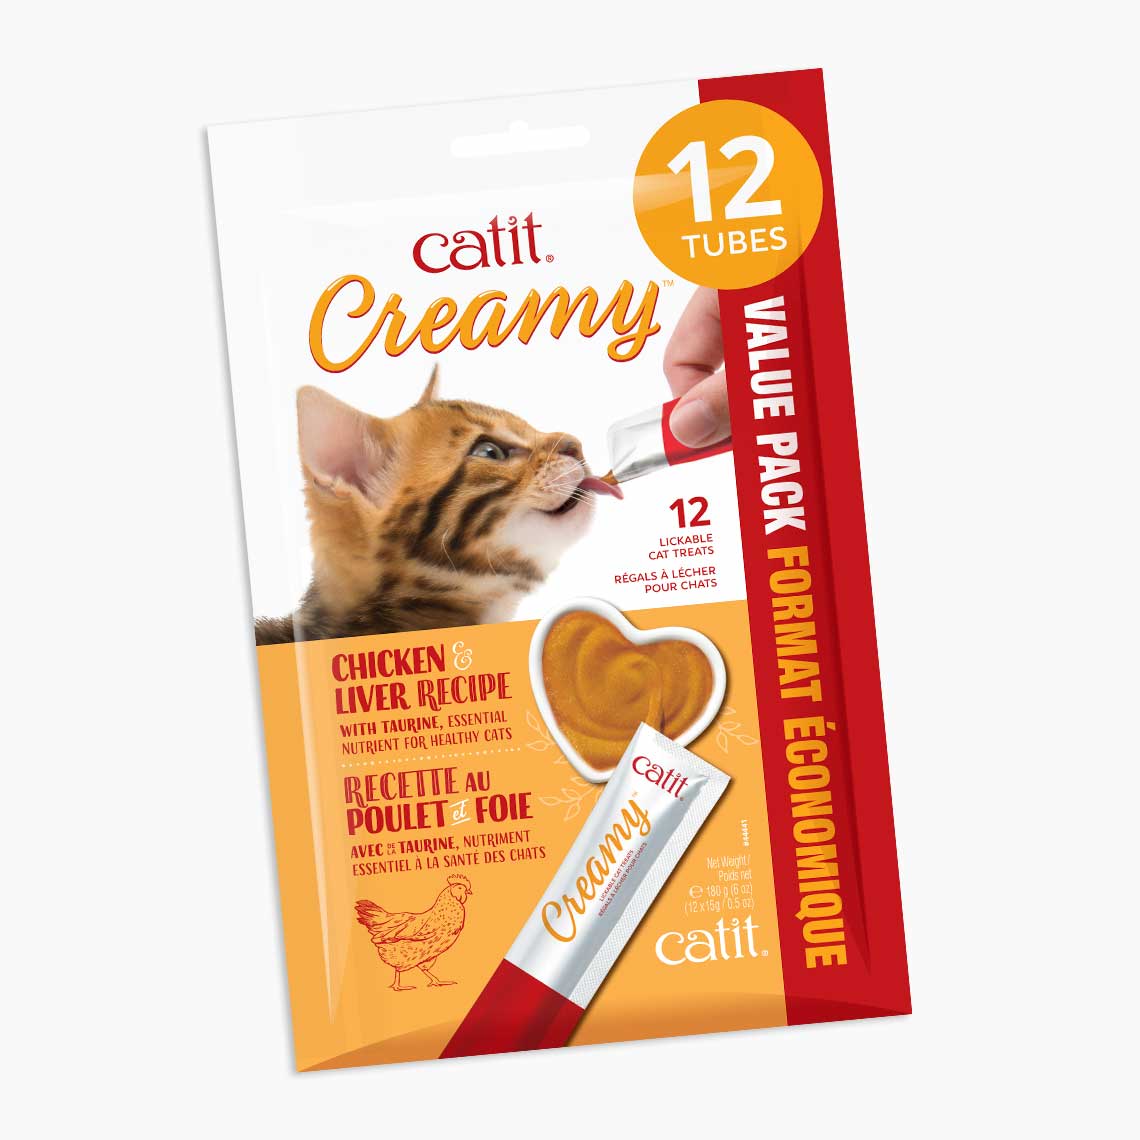 Catit Creamy Cat Treats – 12 Pack